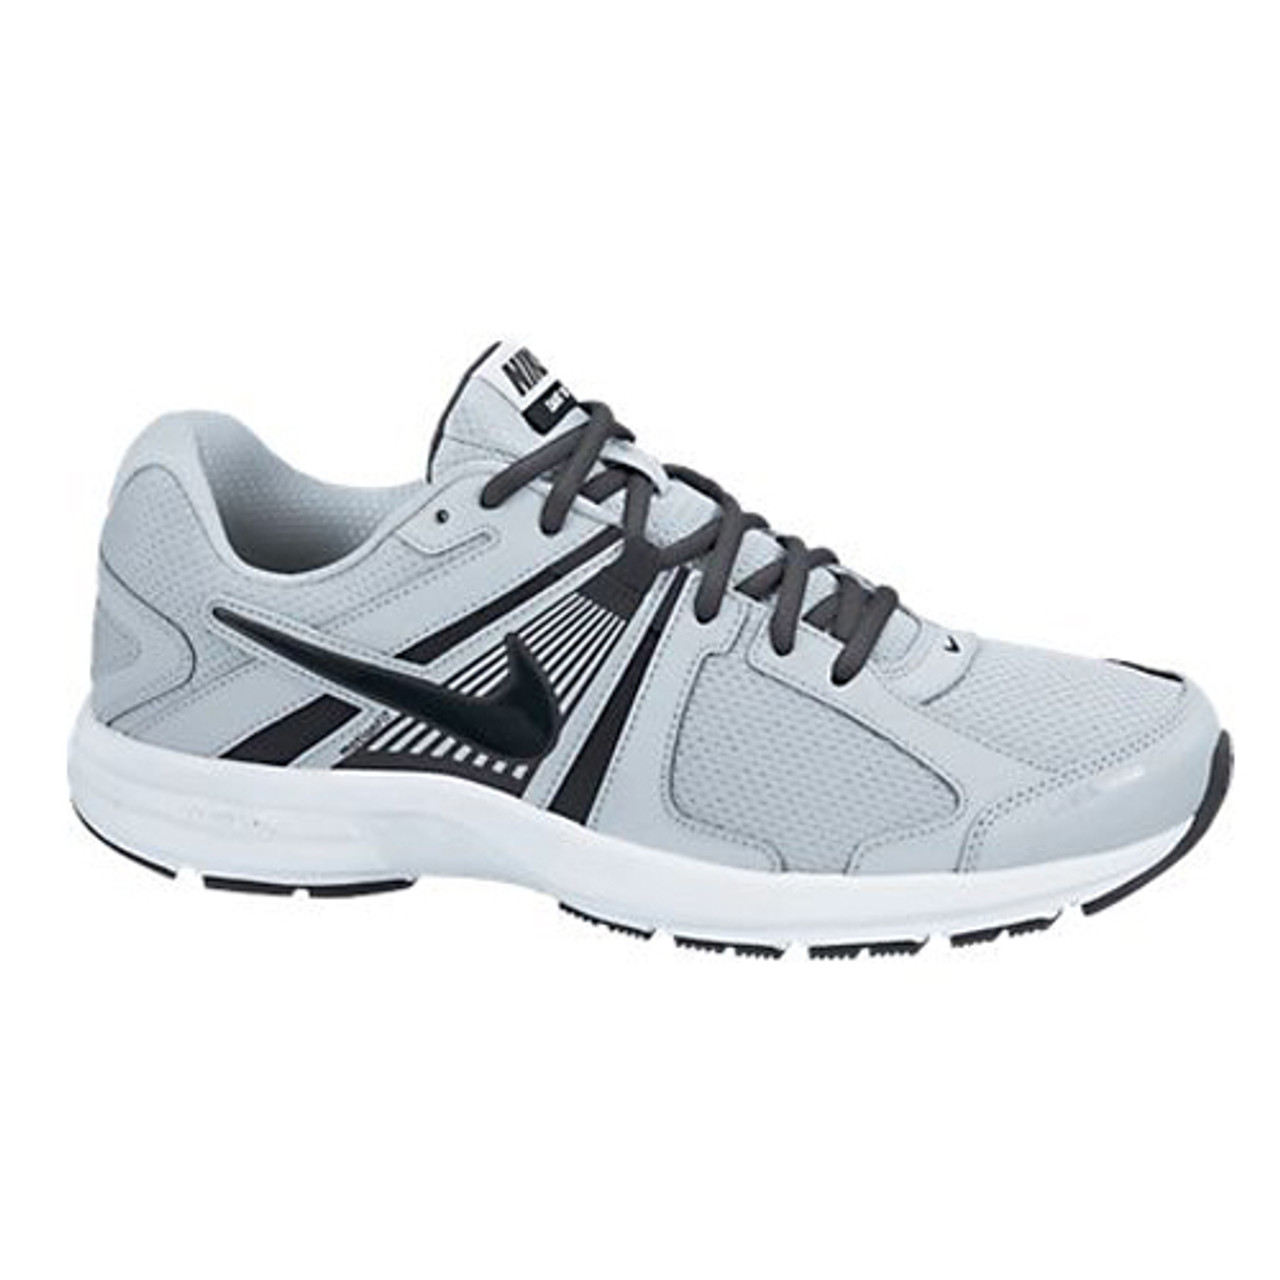 New Nike Dart 10 Mens Running Shoes - Discount Nike Men's Athletic & More - Shoolu.com | Shoolu.com